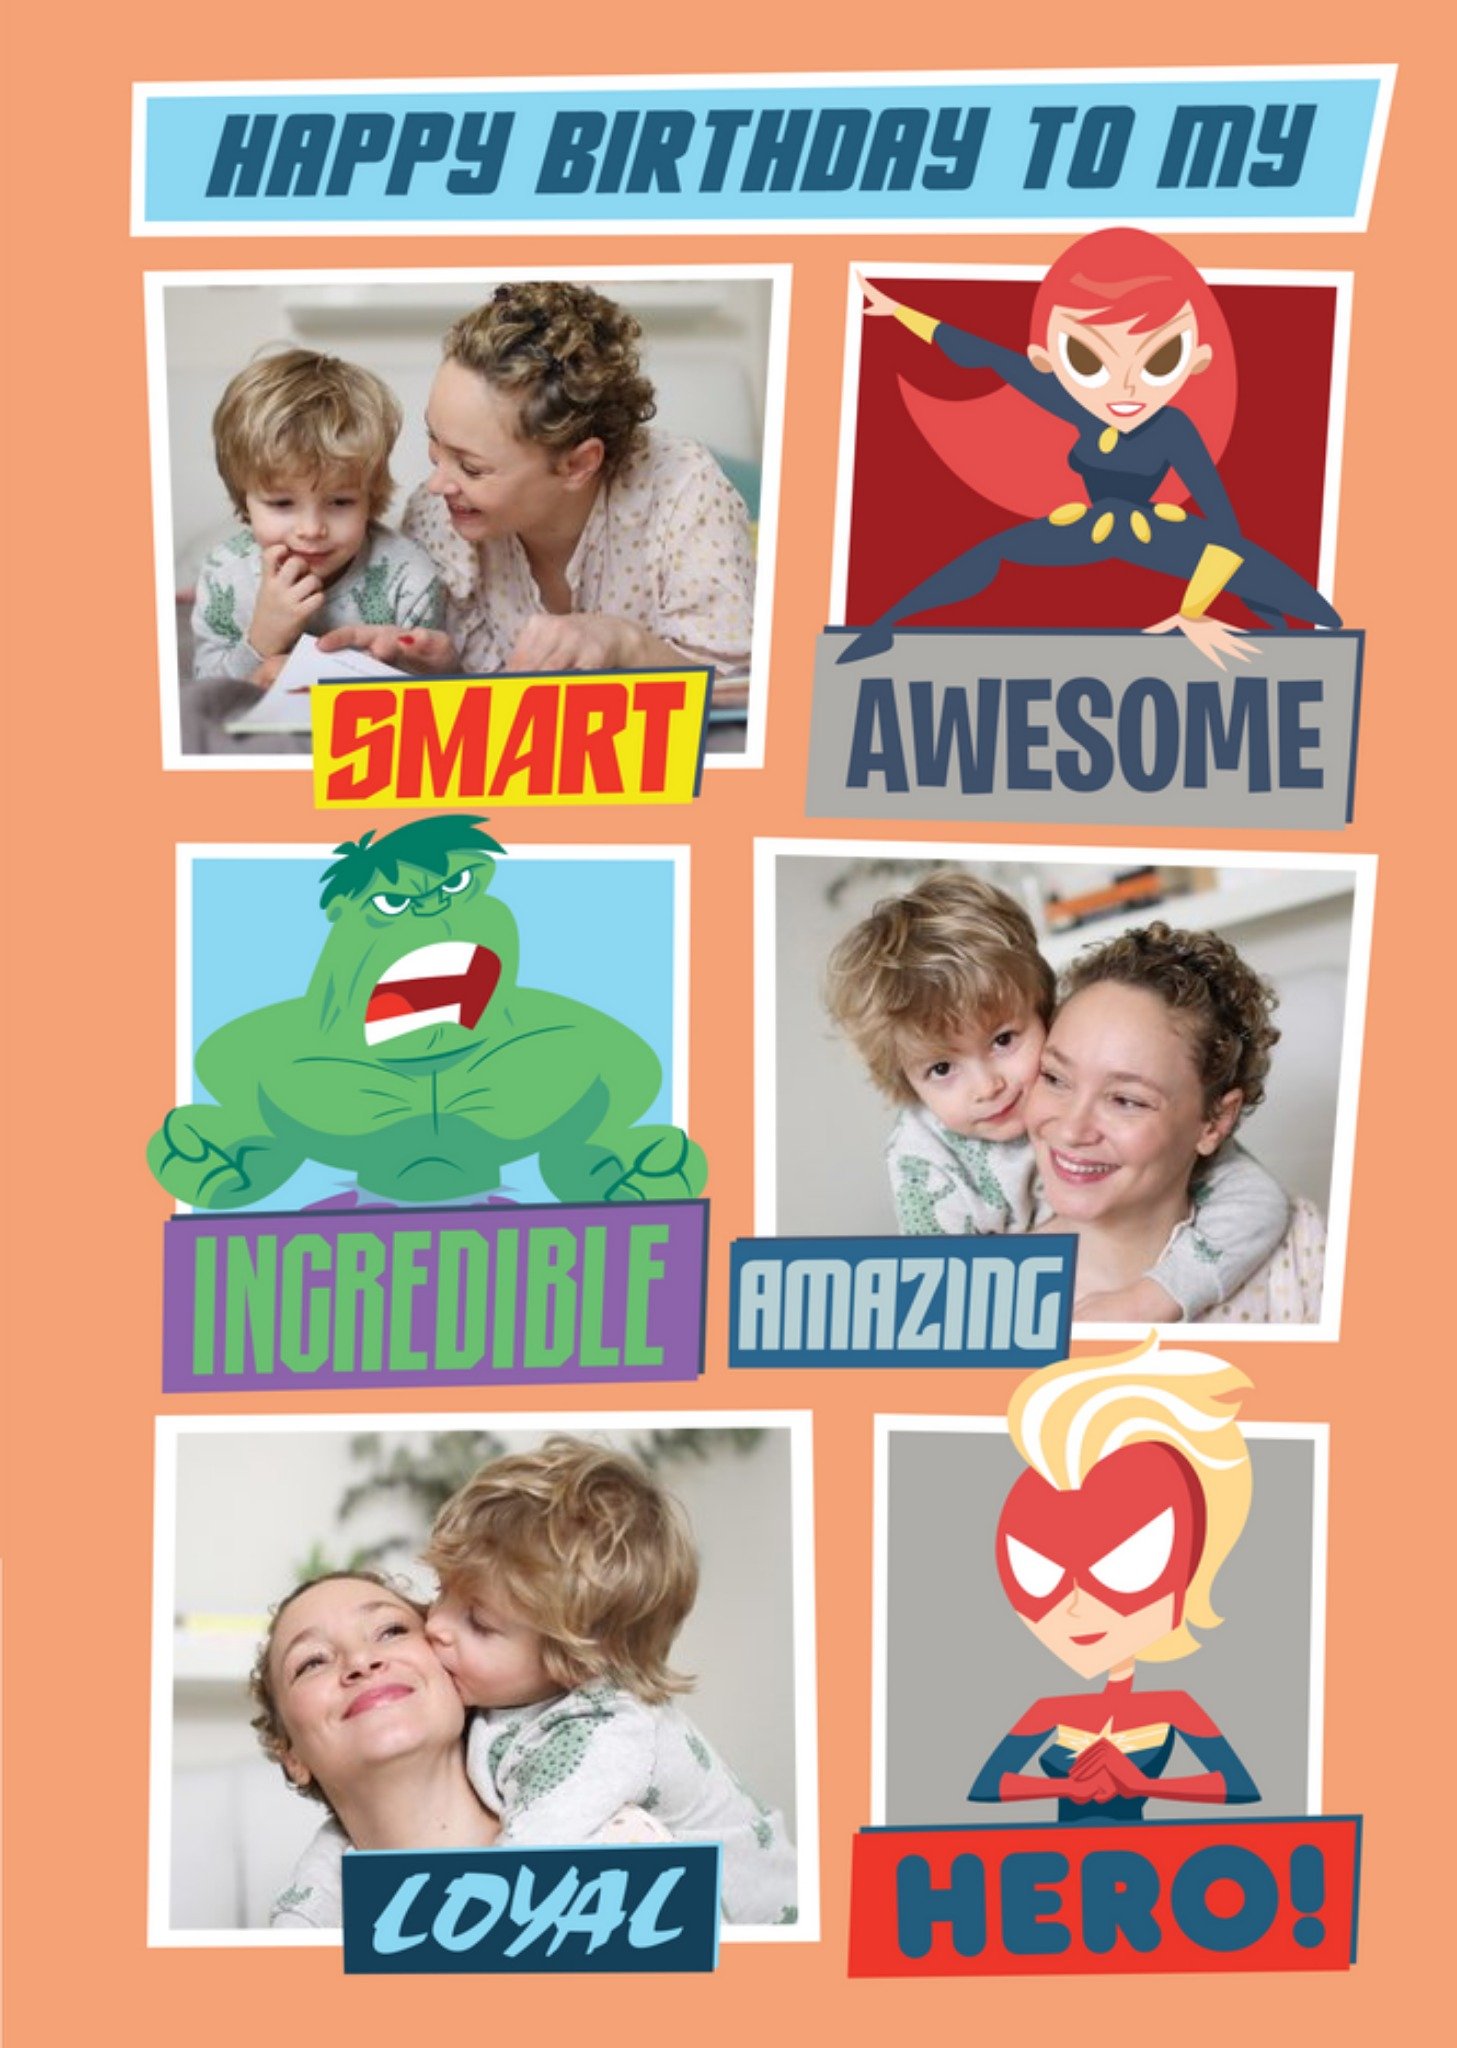 Disney Marvel Comics Superheroes To A Loyal Hero Photo Upload Card, Large